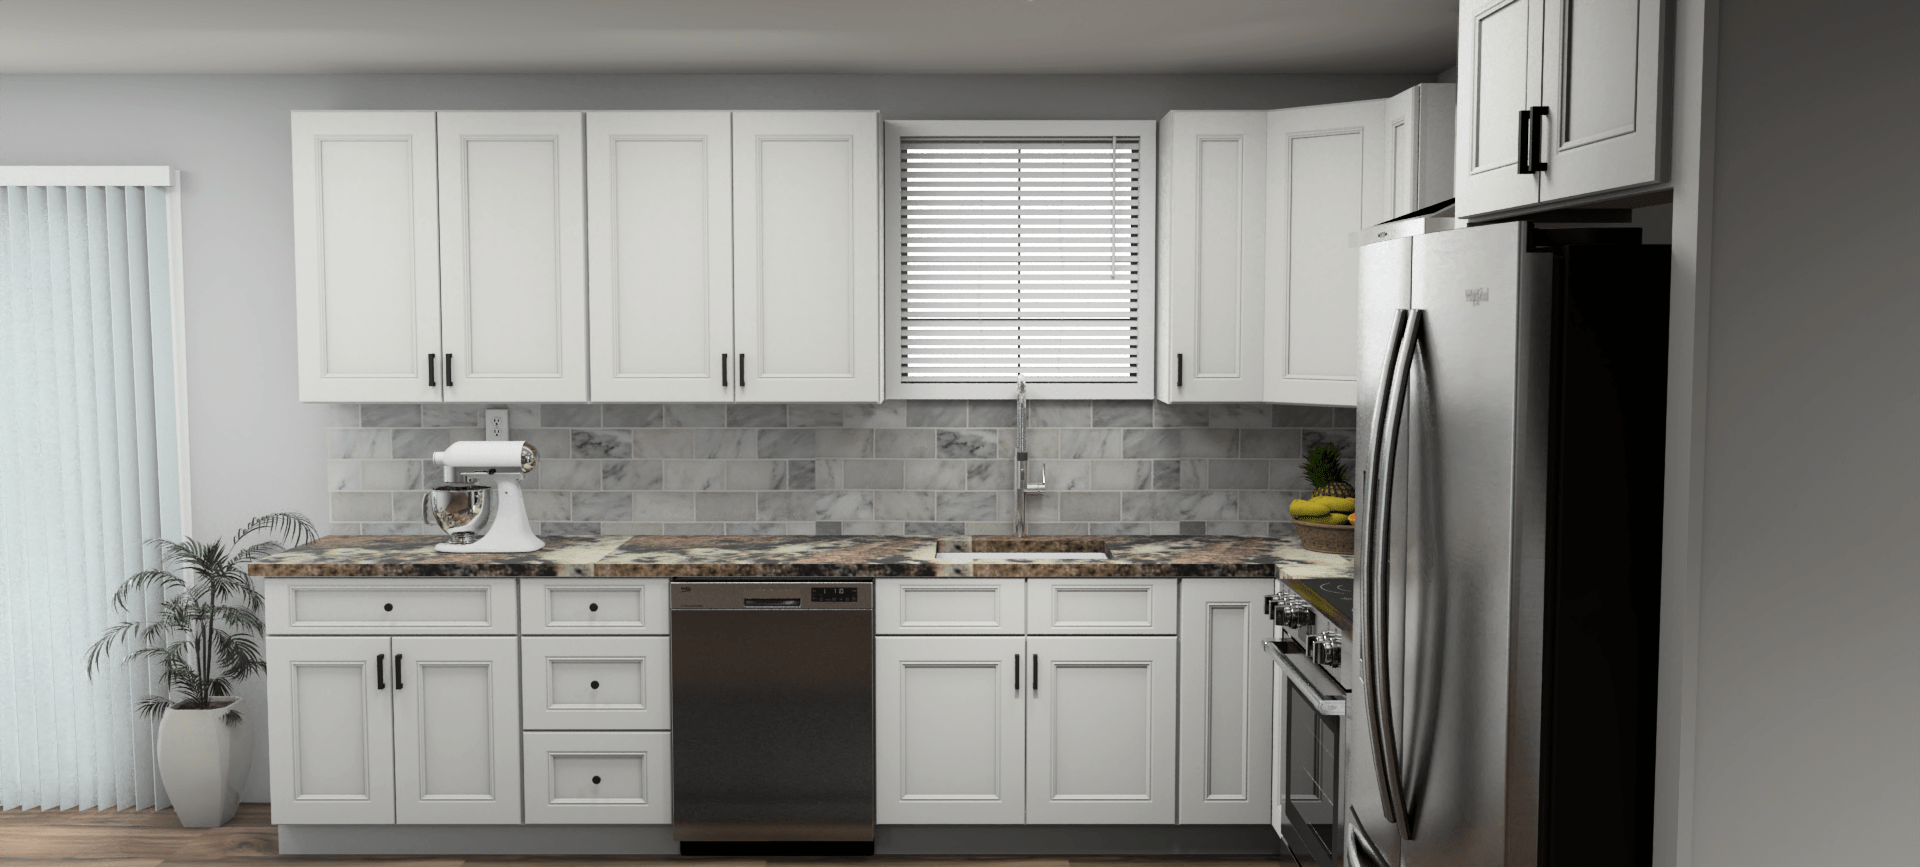 Fabuwood Allure Nexus Frost 12 x 11 L Shaped Kitchen Side Layout Photo